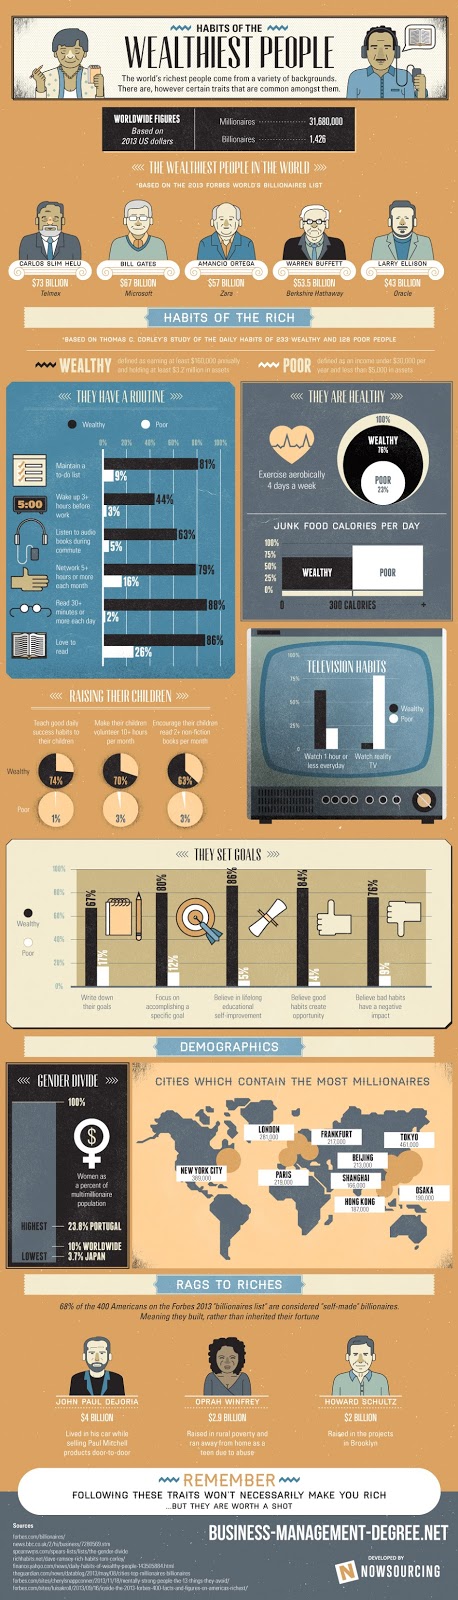 http://assets.entrepreneur.com/article/1389897325-habits-worlds-wealthiest-people-infographic.jpg